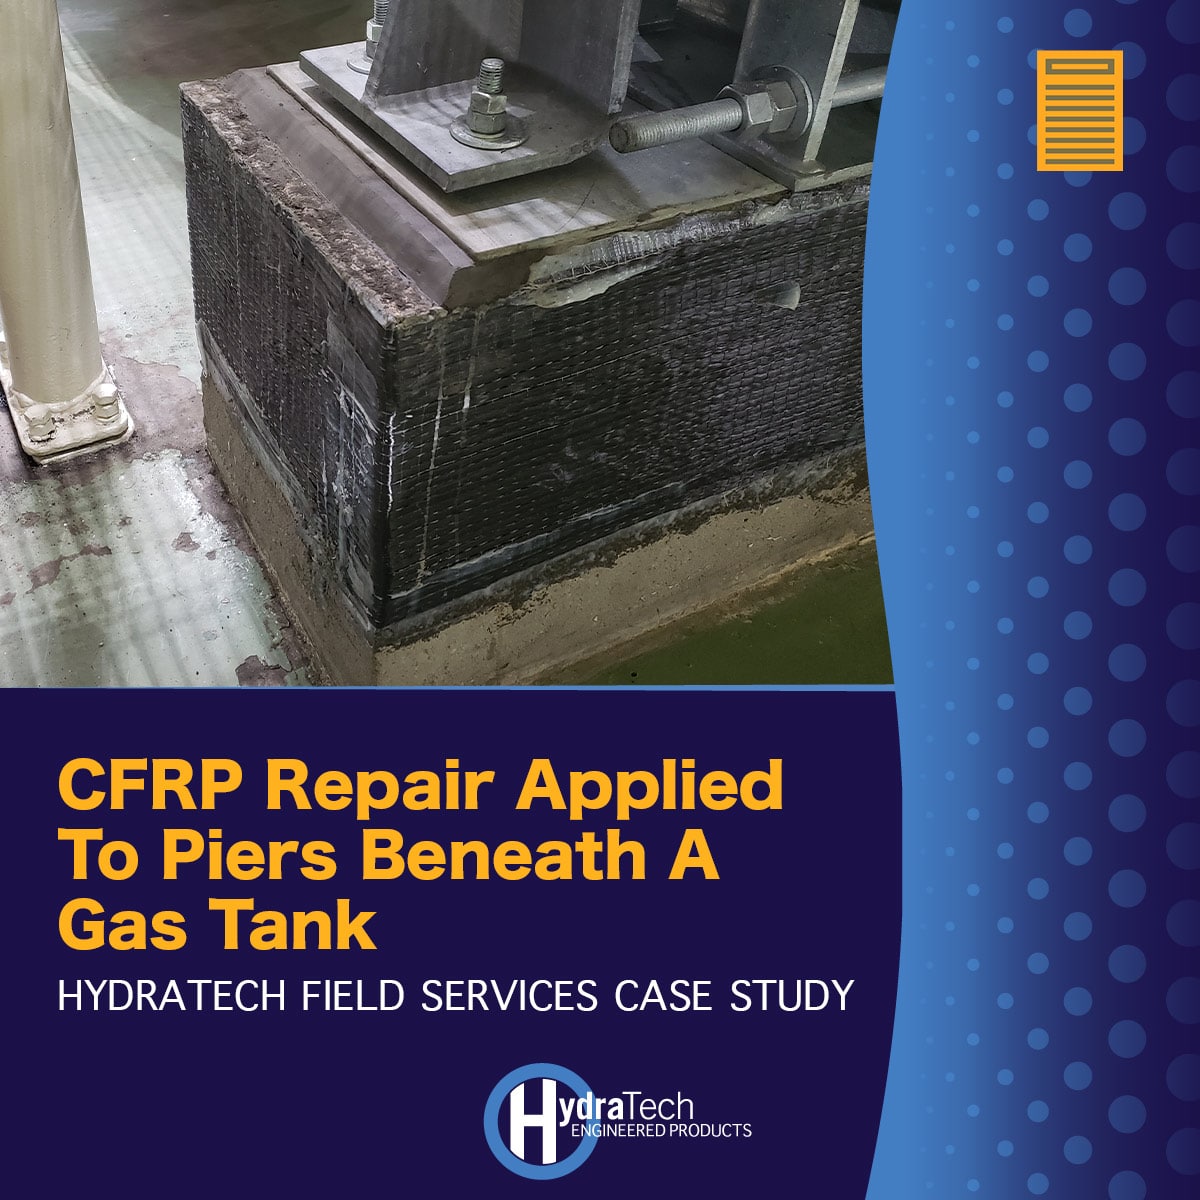 CFRP Repair, 'CFRP Repair Applied To Piers Beneath A Gas Tank'